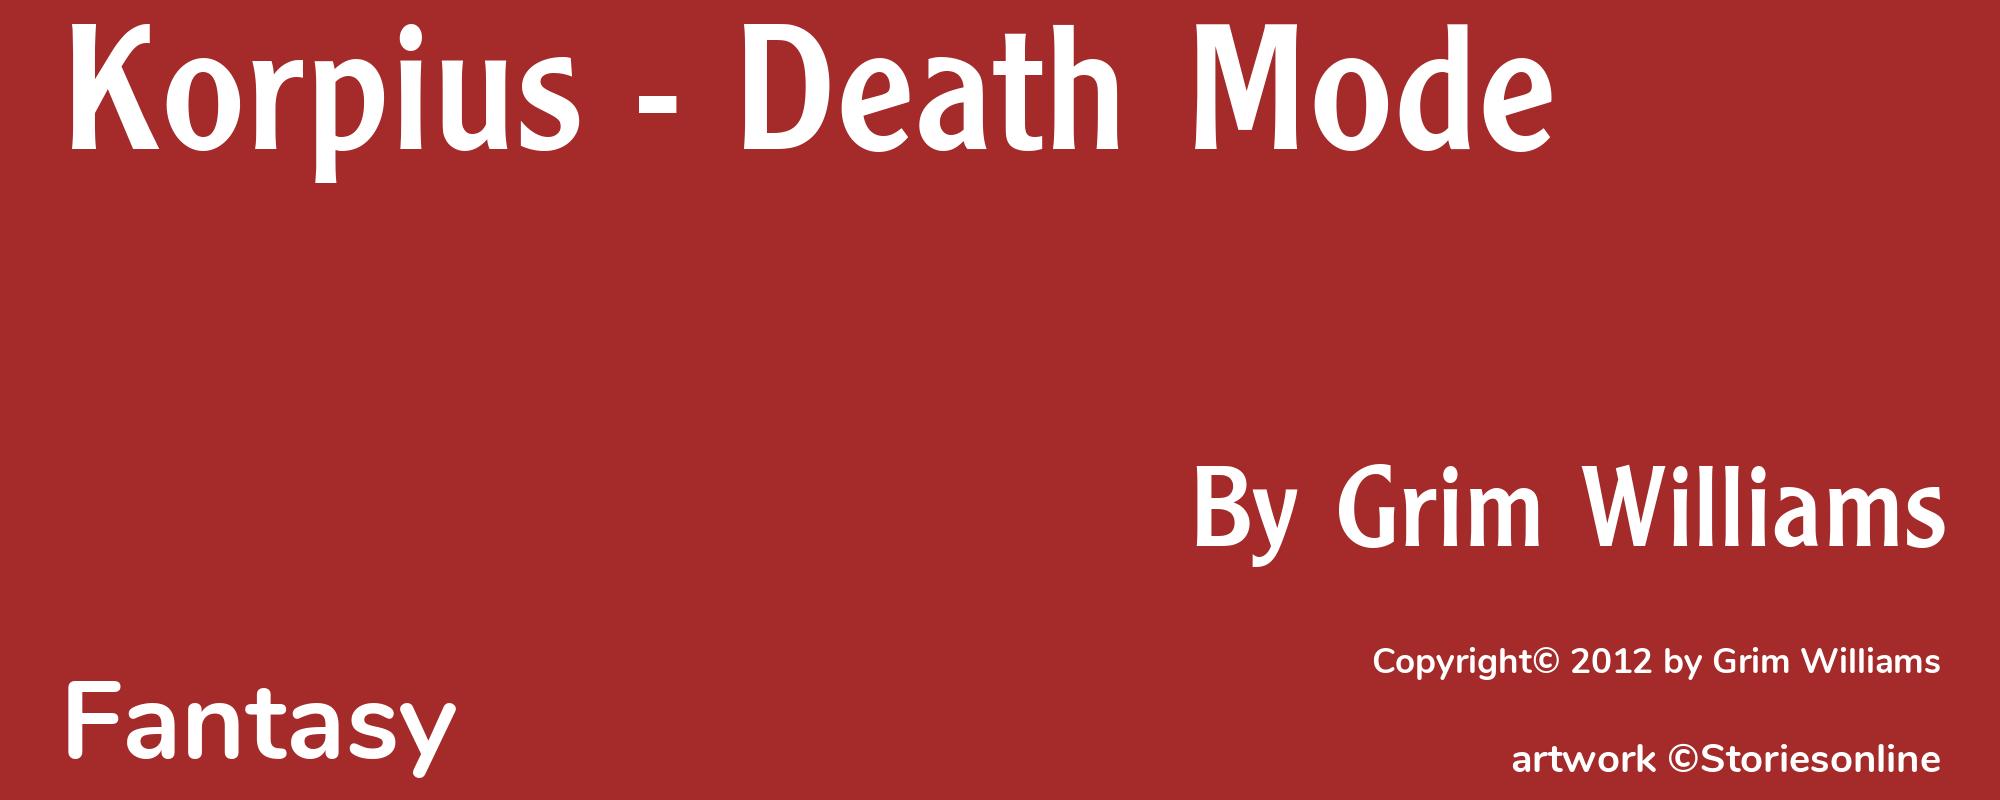 Korpius - Death Mode - Cover